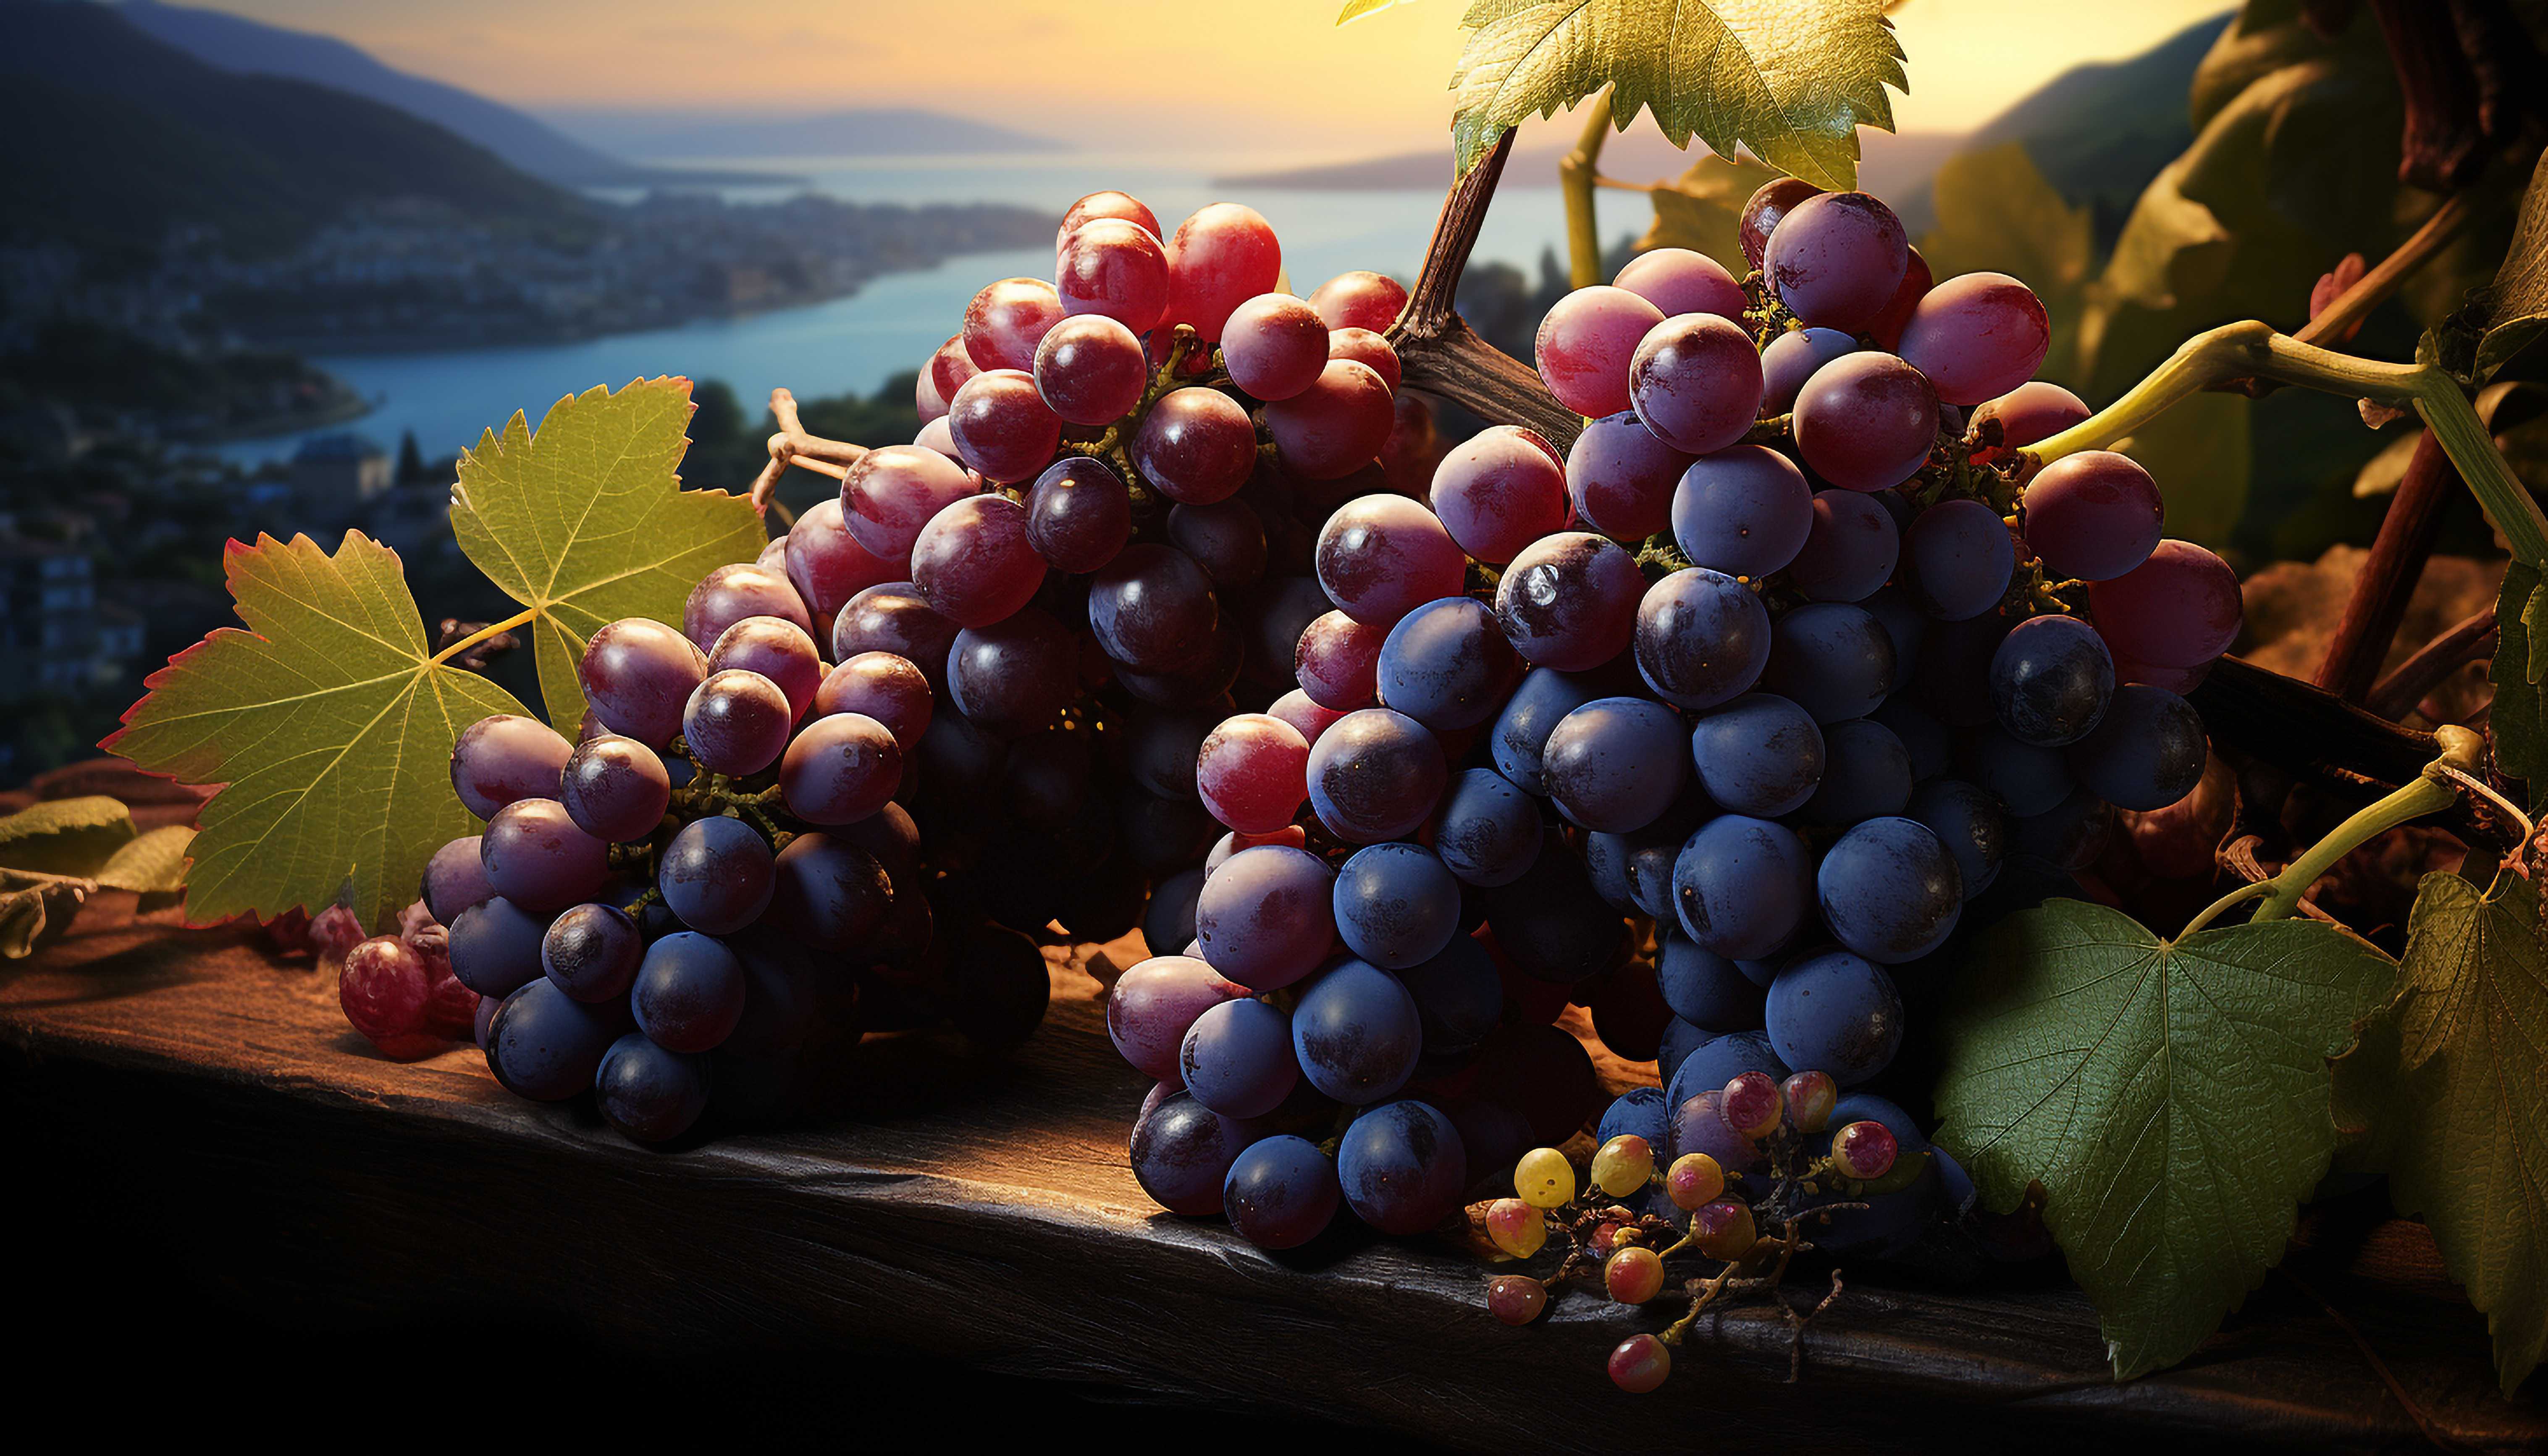 freshness-nature-bounty-grape-fruit-leaf-autumn-vineyard-winemaking-generated-by-artificial-intelligence.jpg